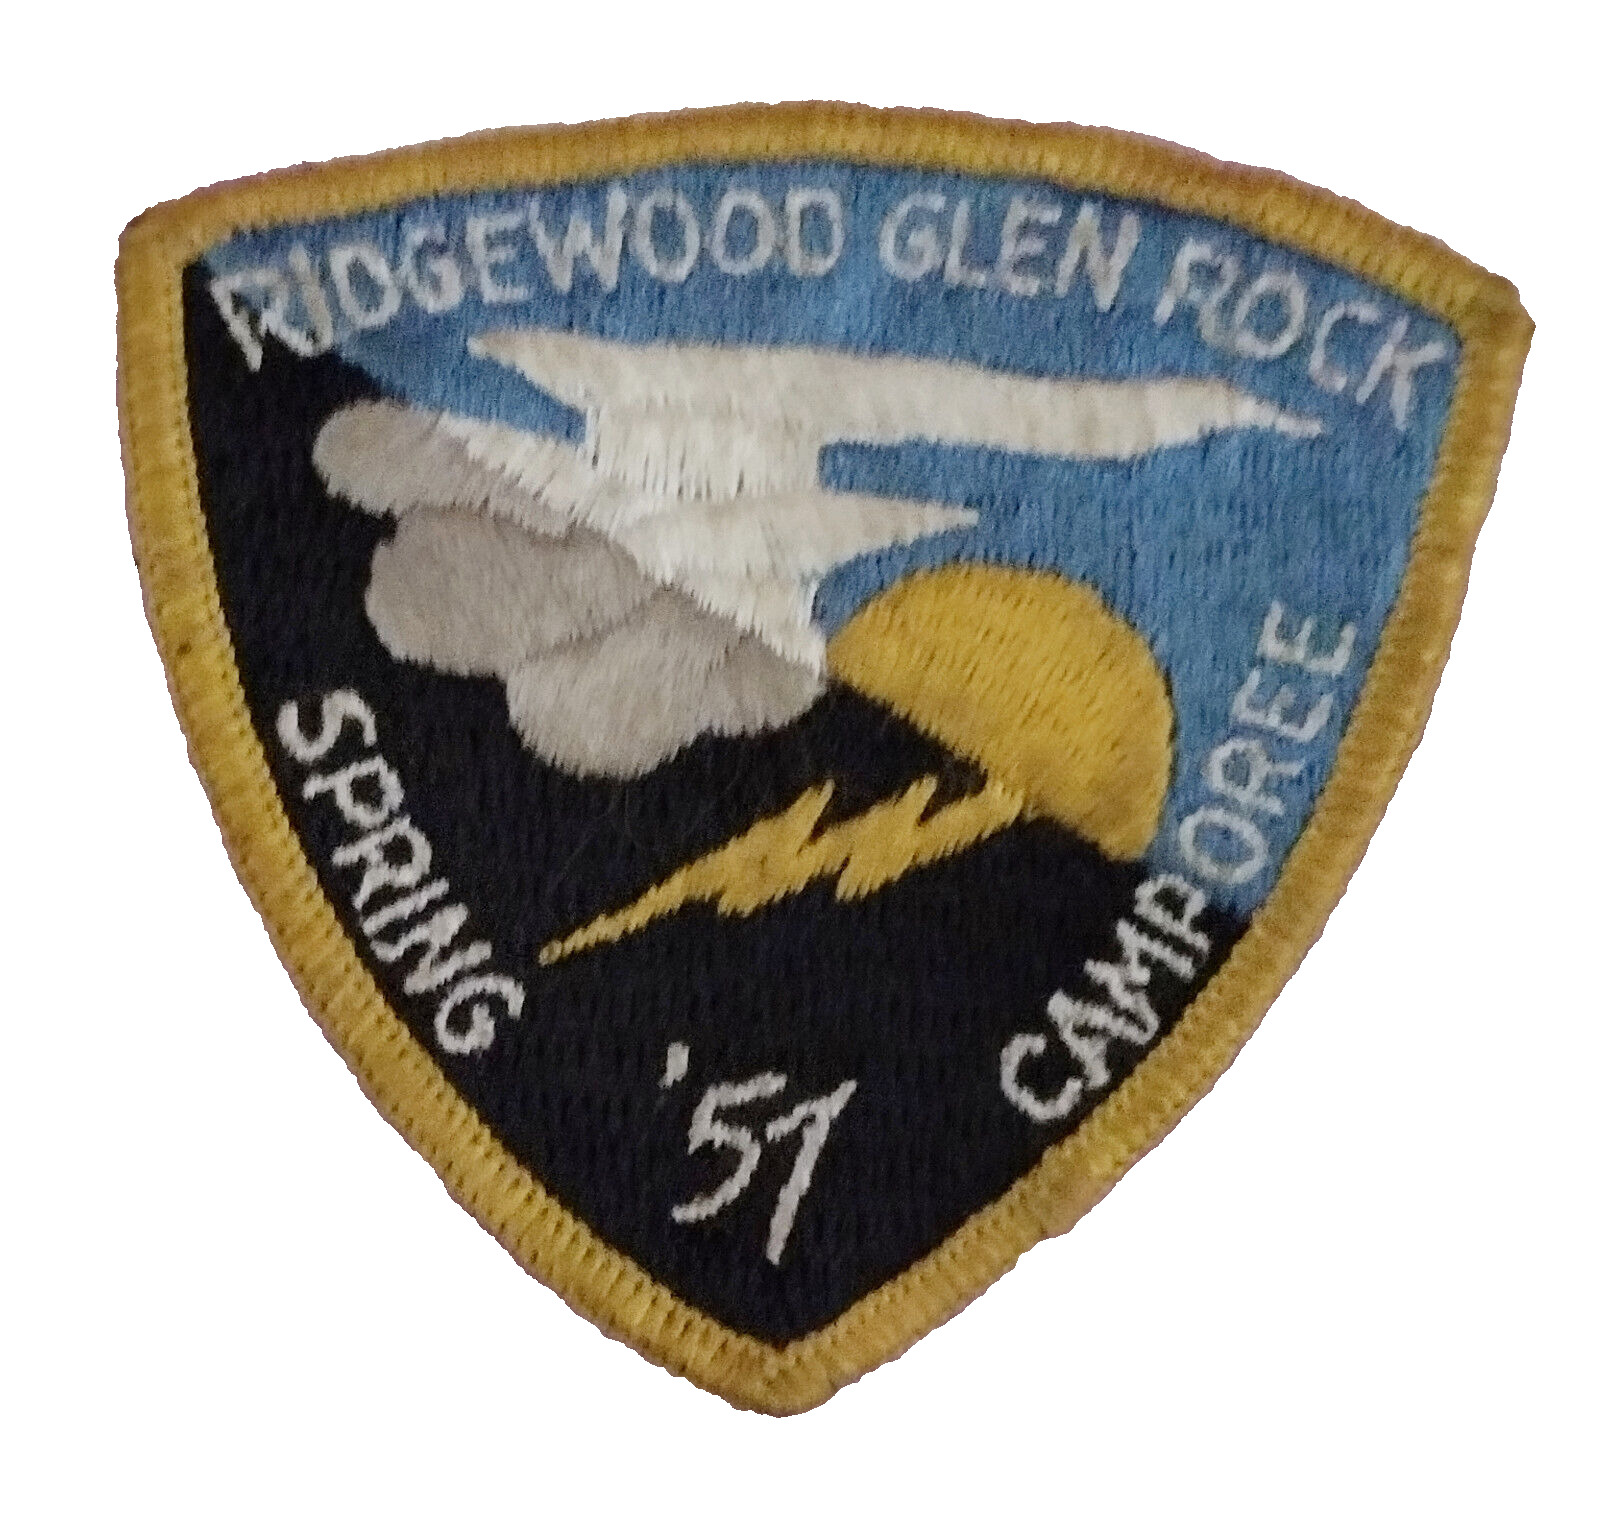 1951 Ridgewood Glen Rock Spring Camporee Council Patch New Jersey BSA Boy Scouts